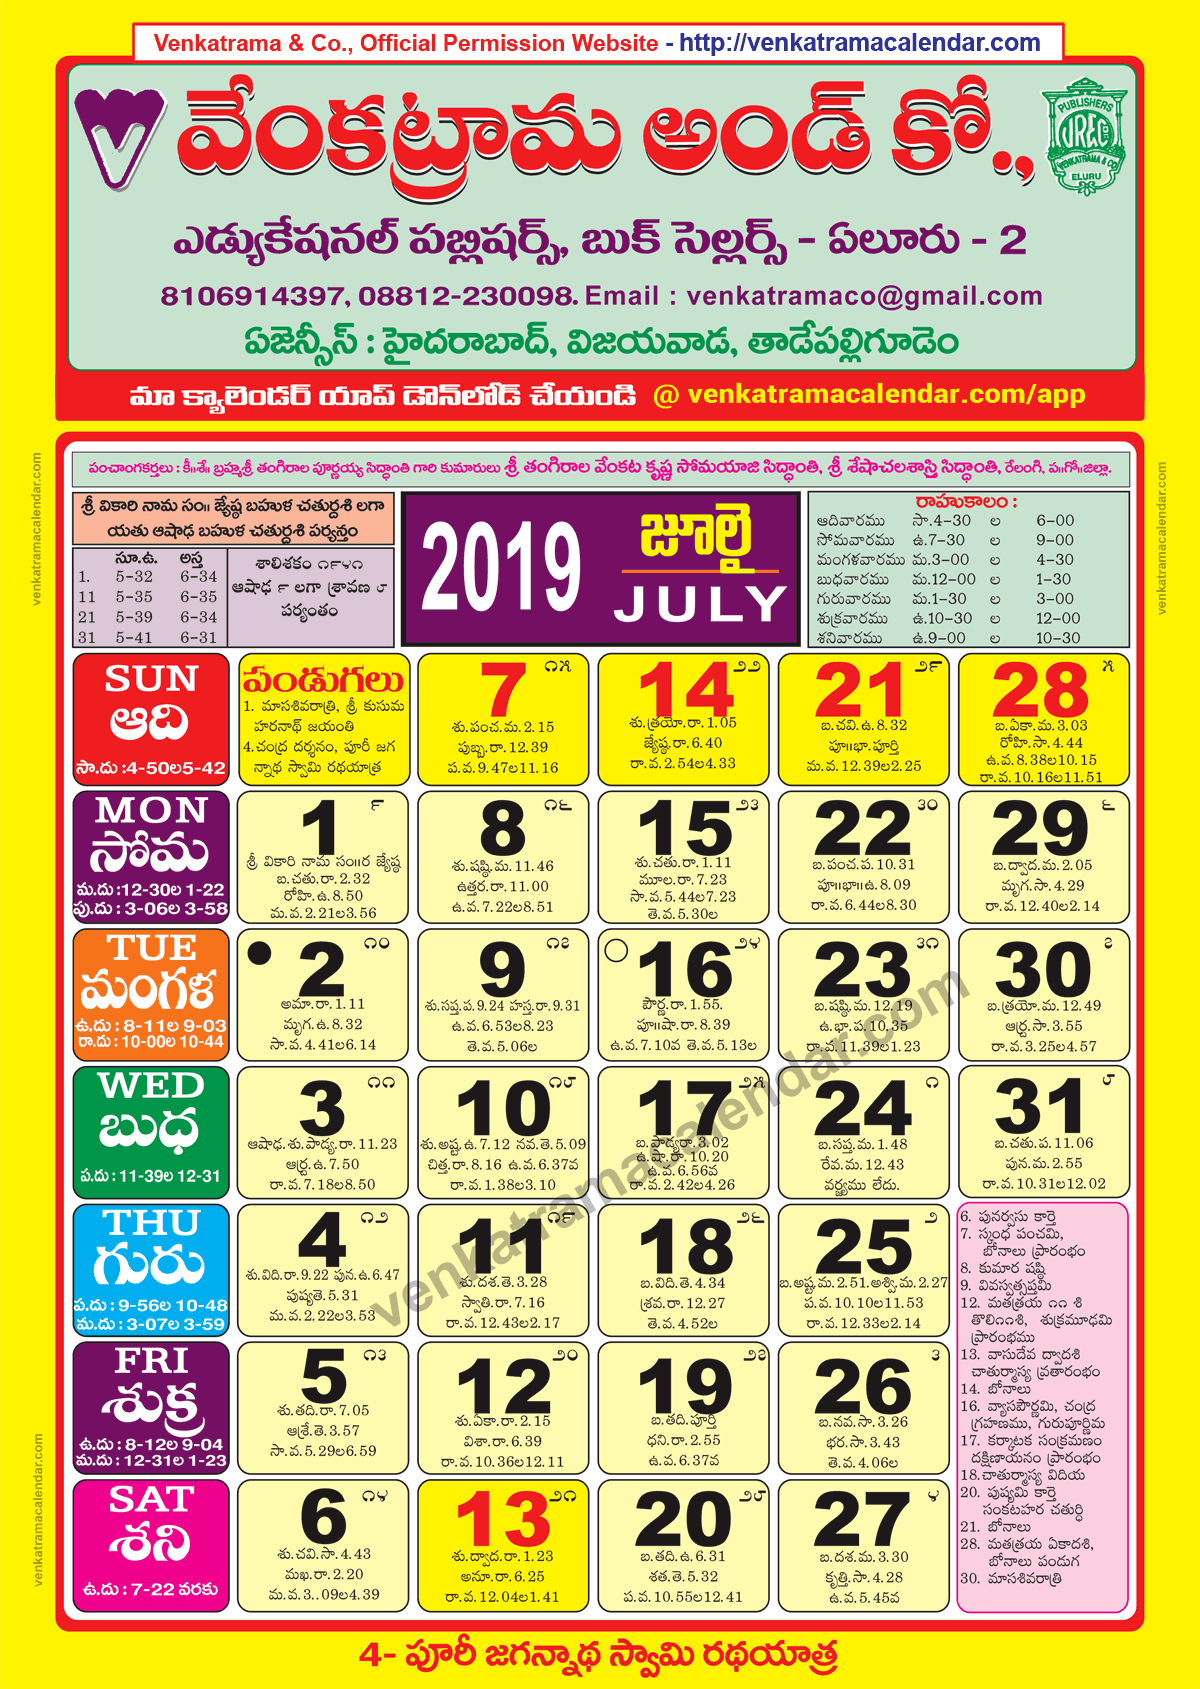 venkatrama-co-2019-july-telugu-calendar-colour